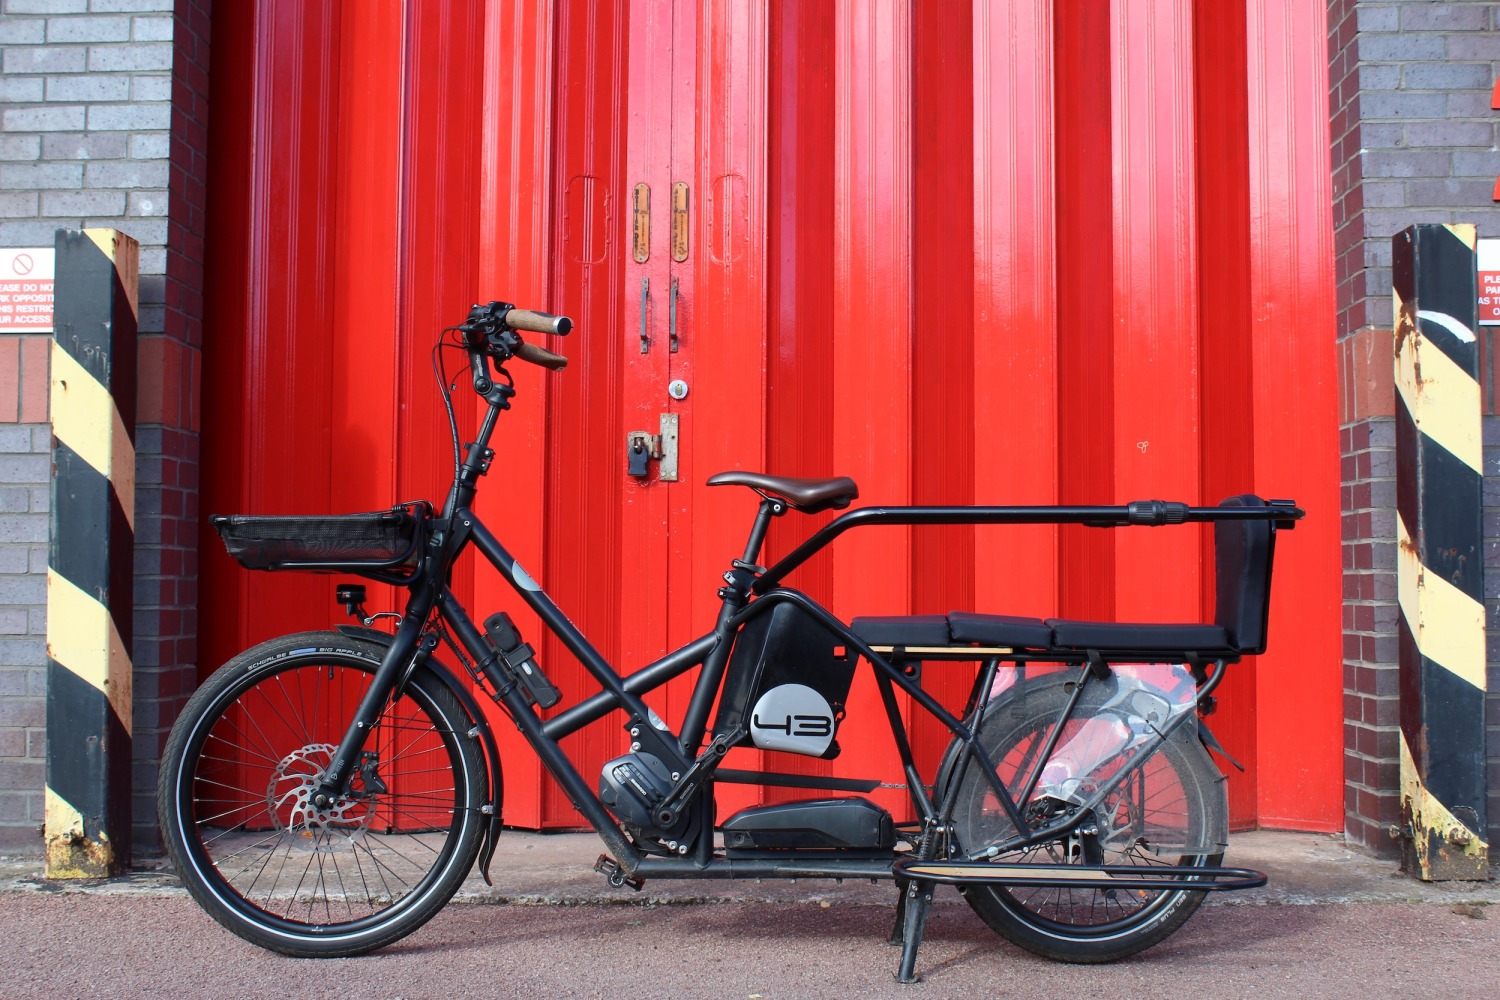 Full review of the Bike43 longtail cargo bike